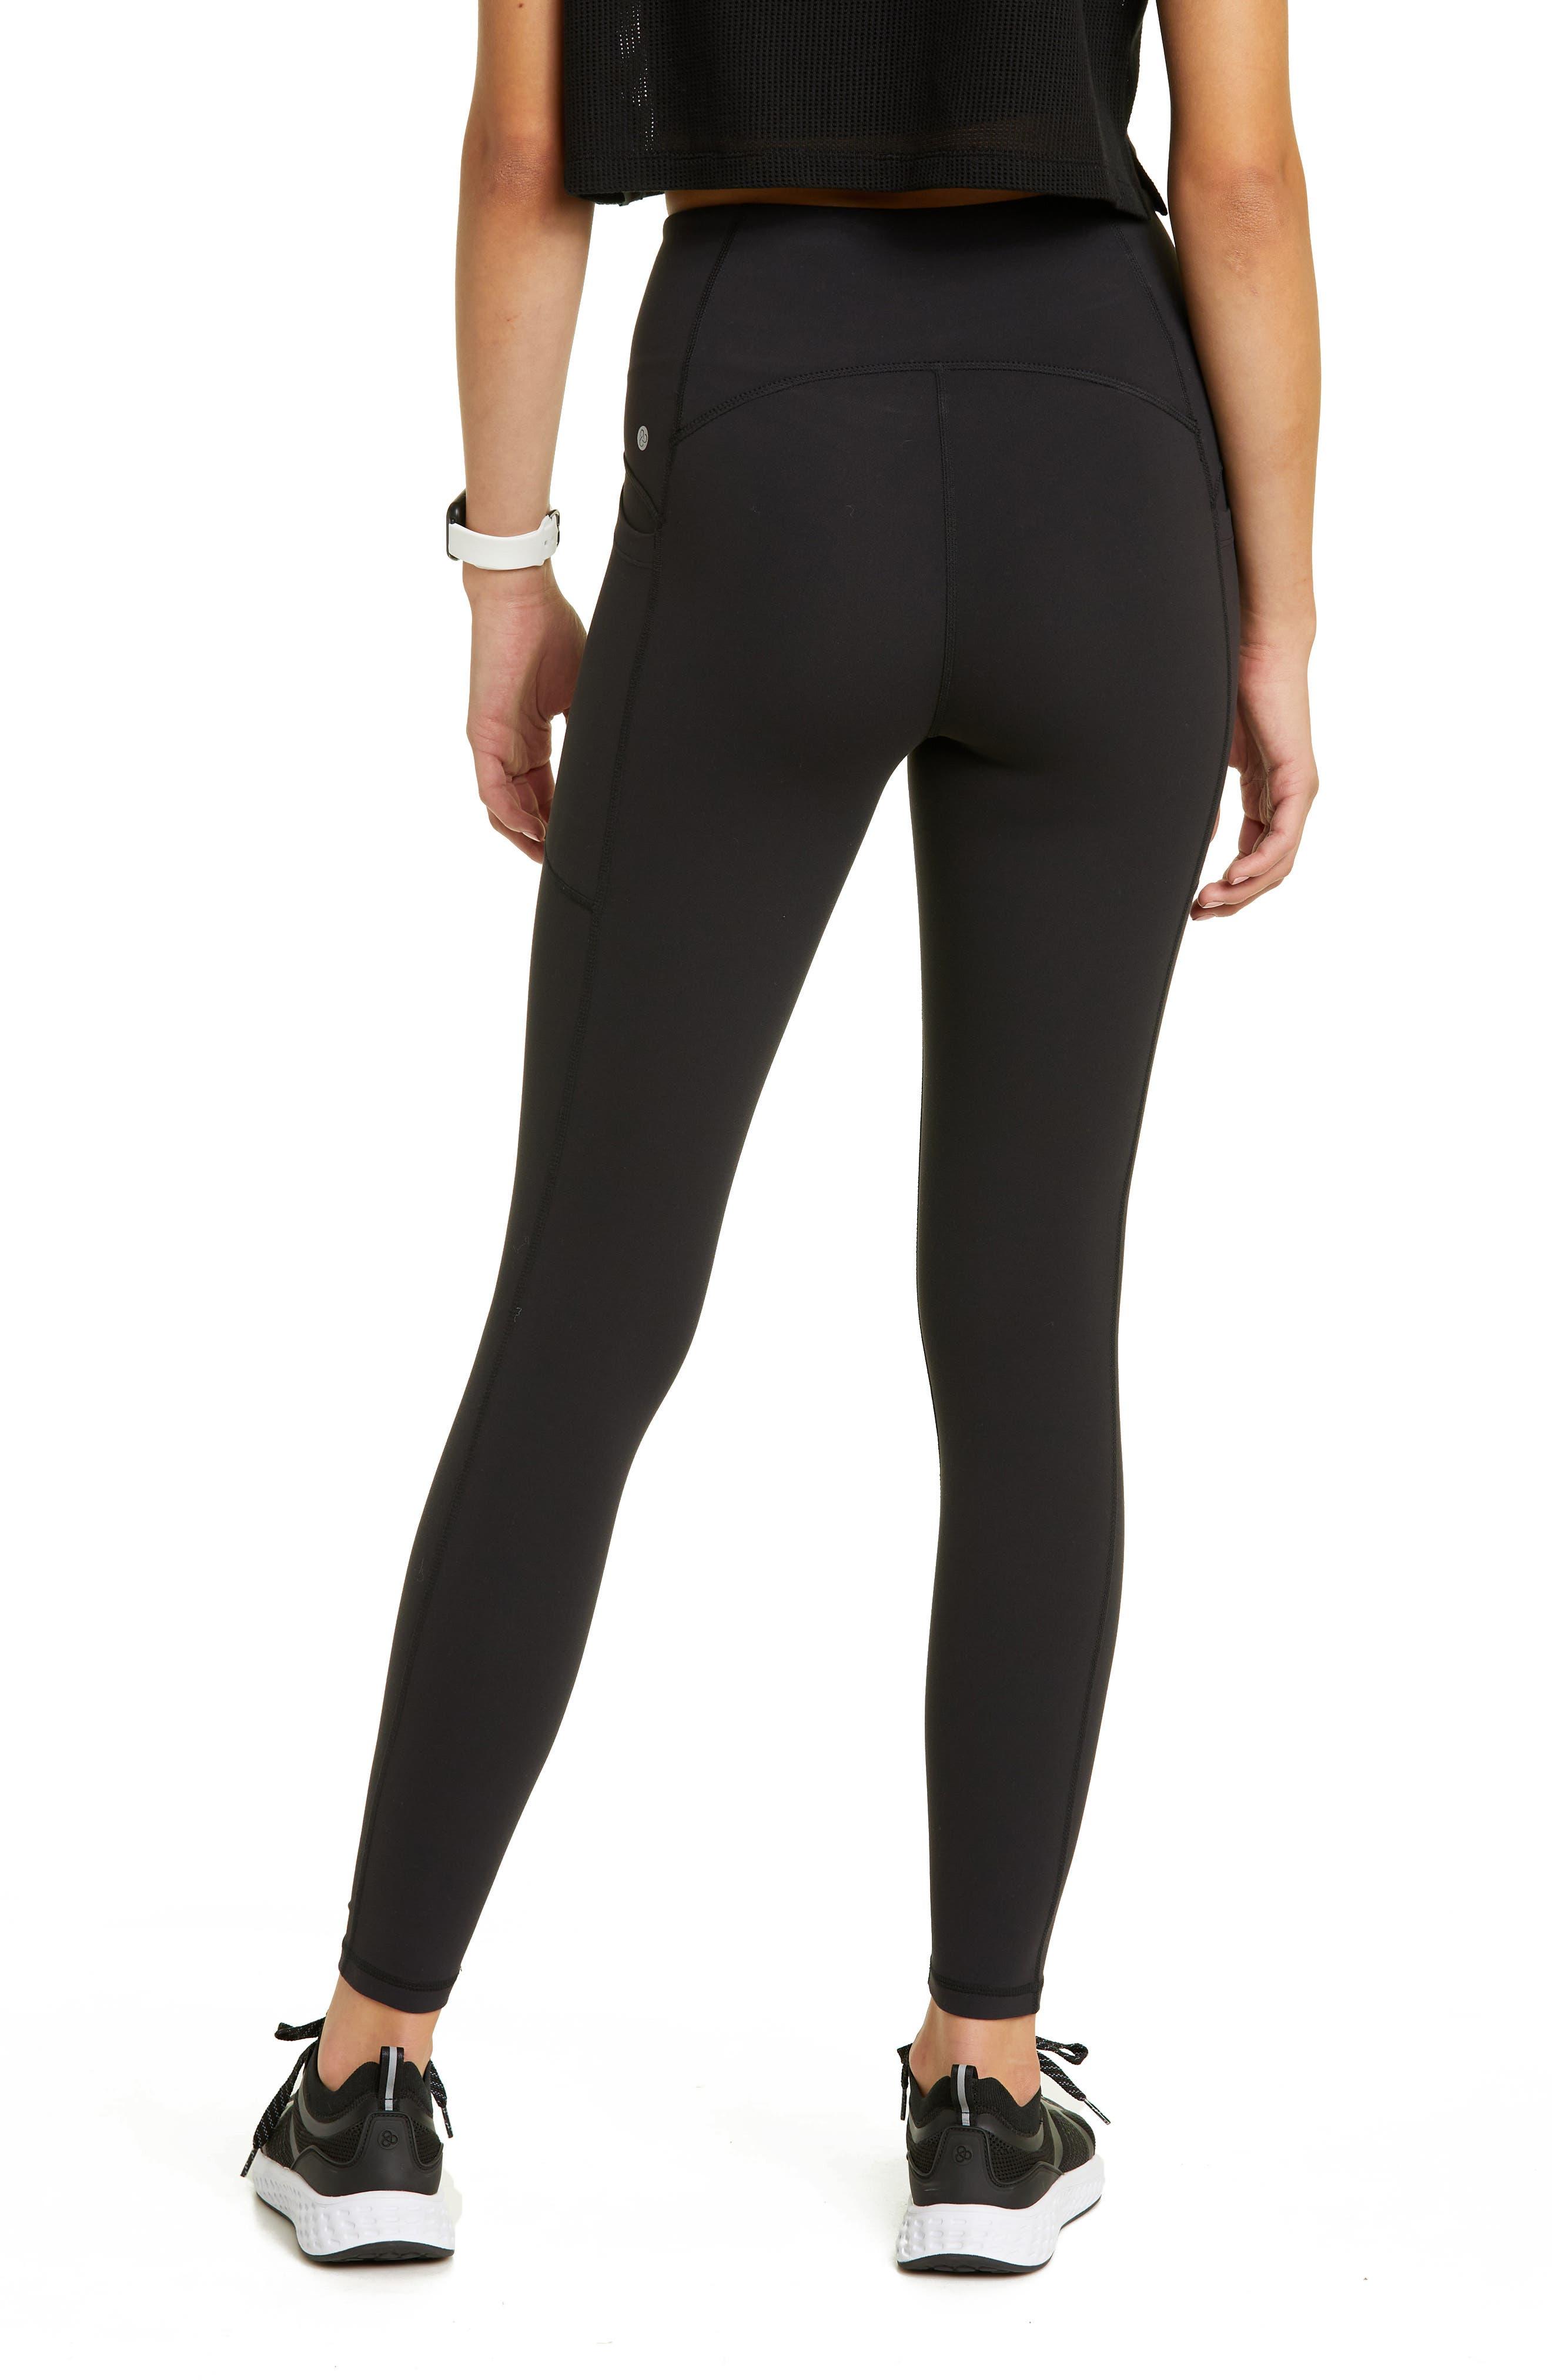 Zella Studio Luxe High Waist Pocket leggings in Black